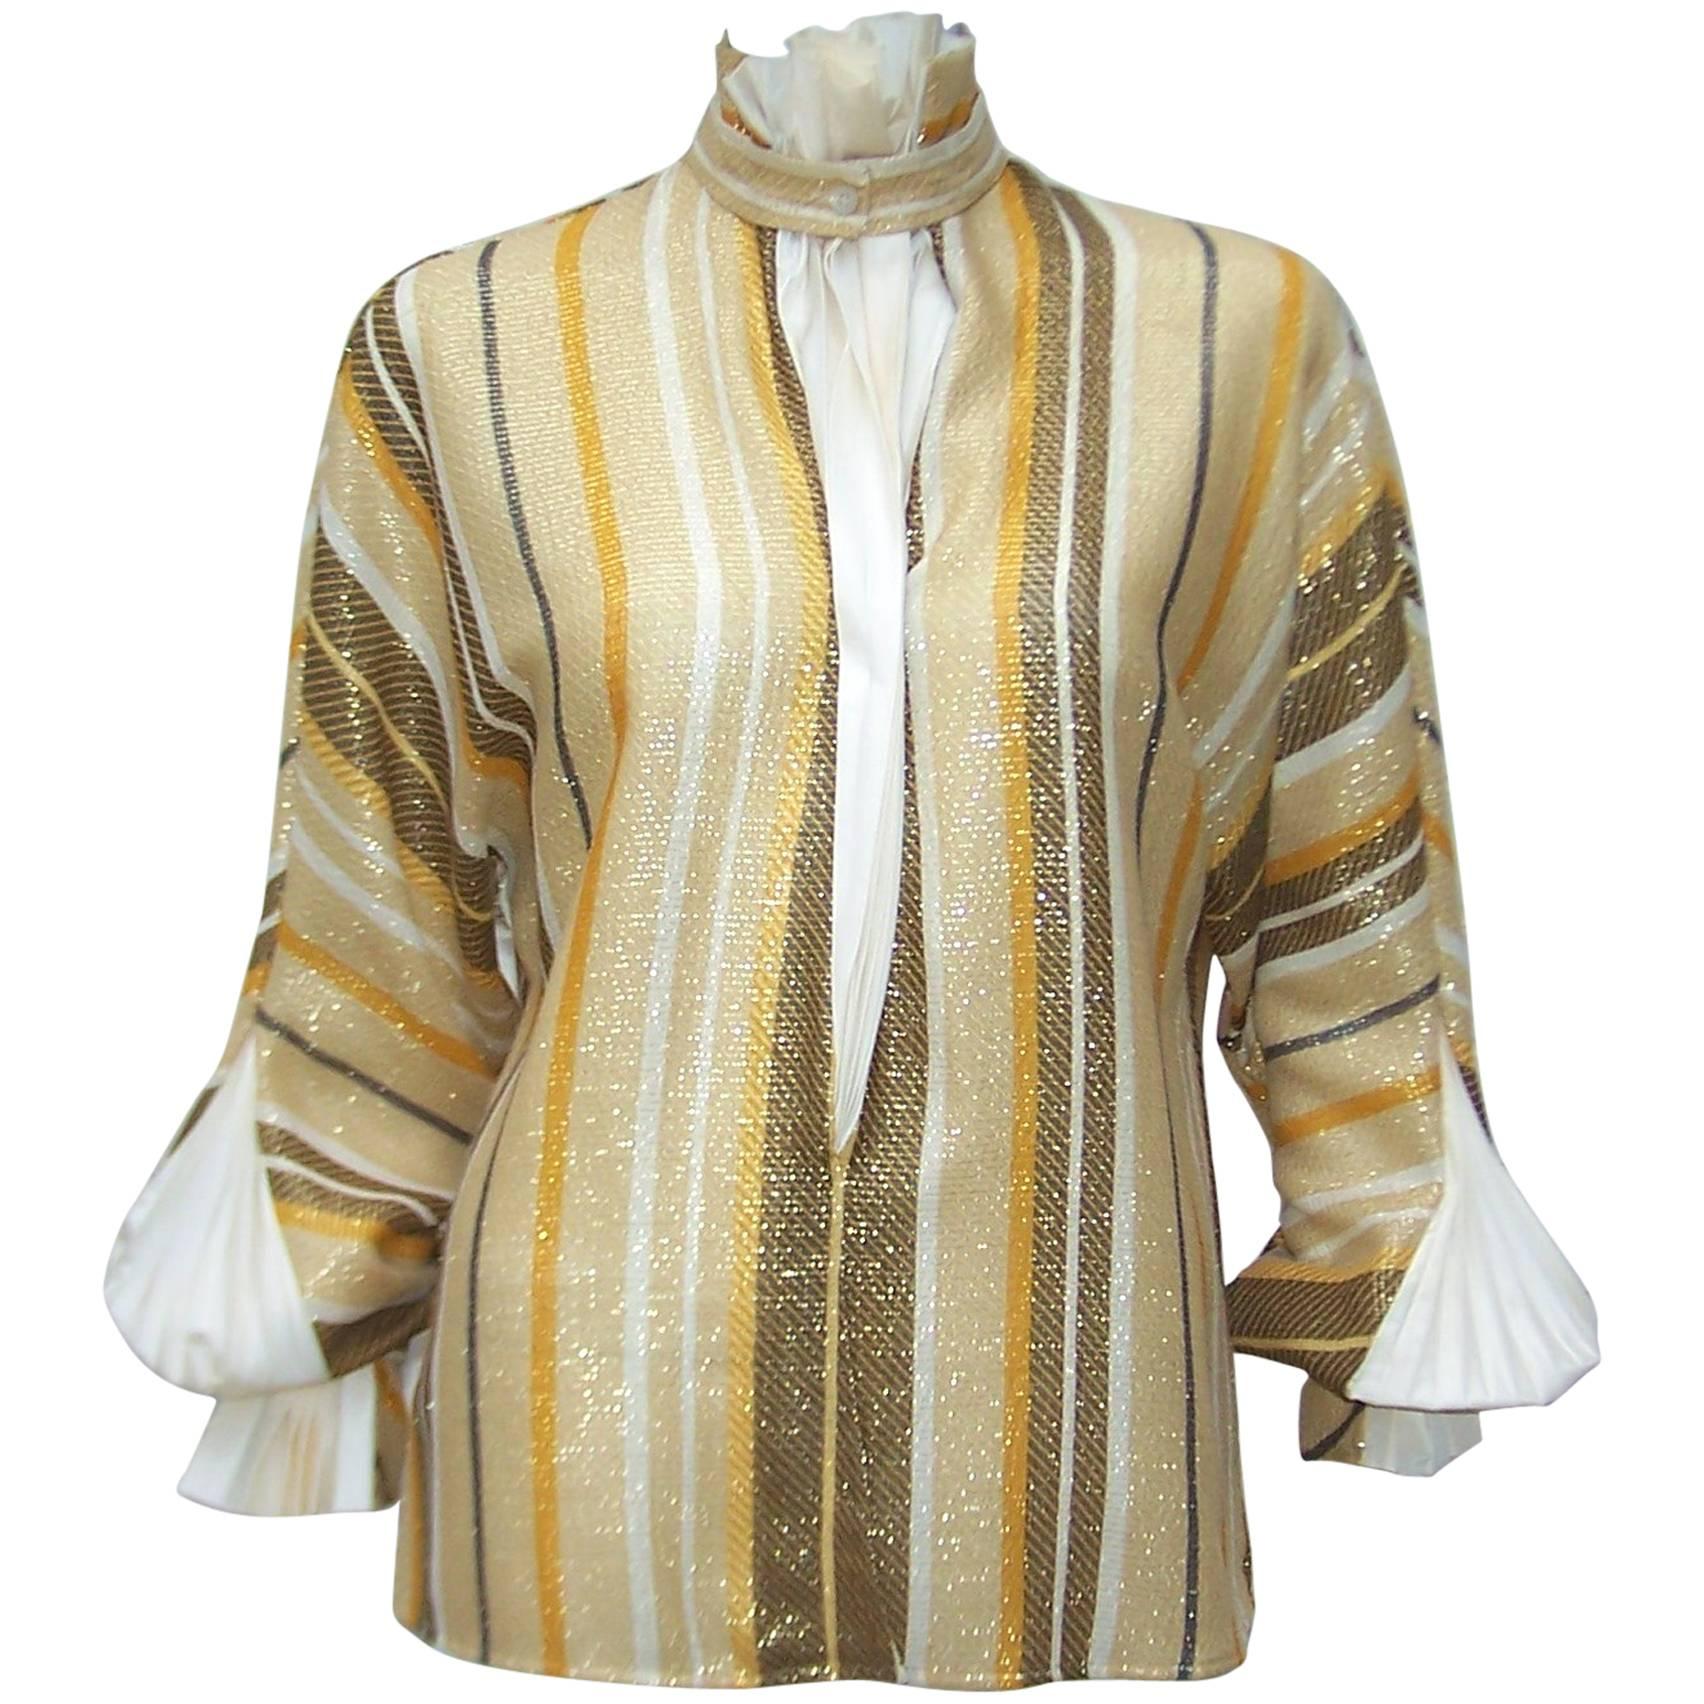 1980's Gianfranco Ferre Striped Gold Lurex Dandy Style Blouse